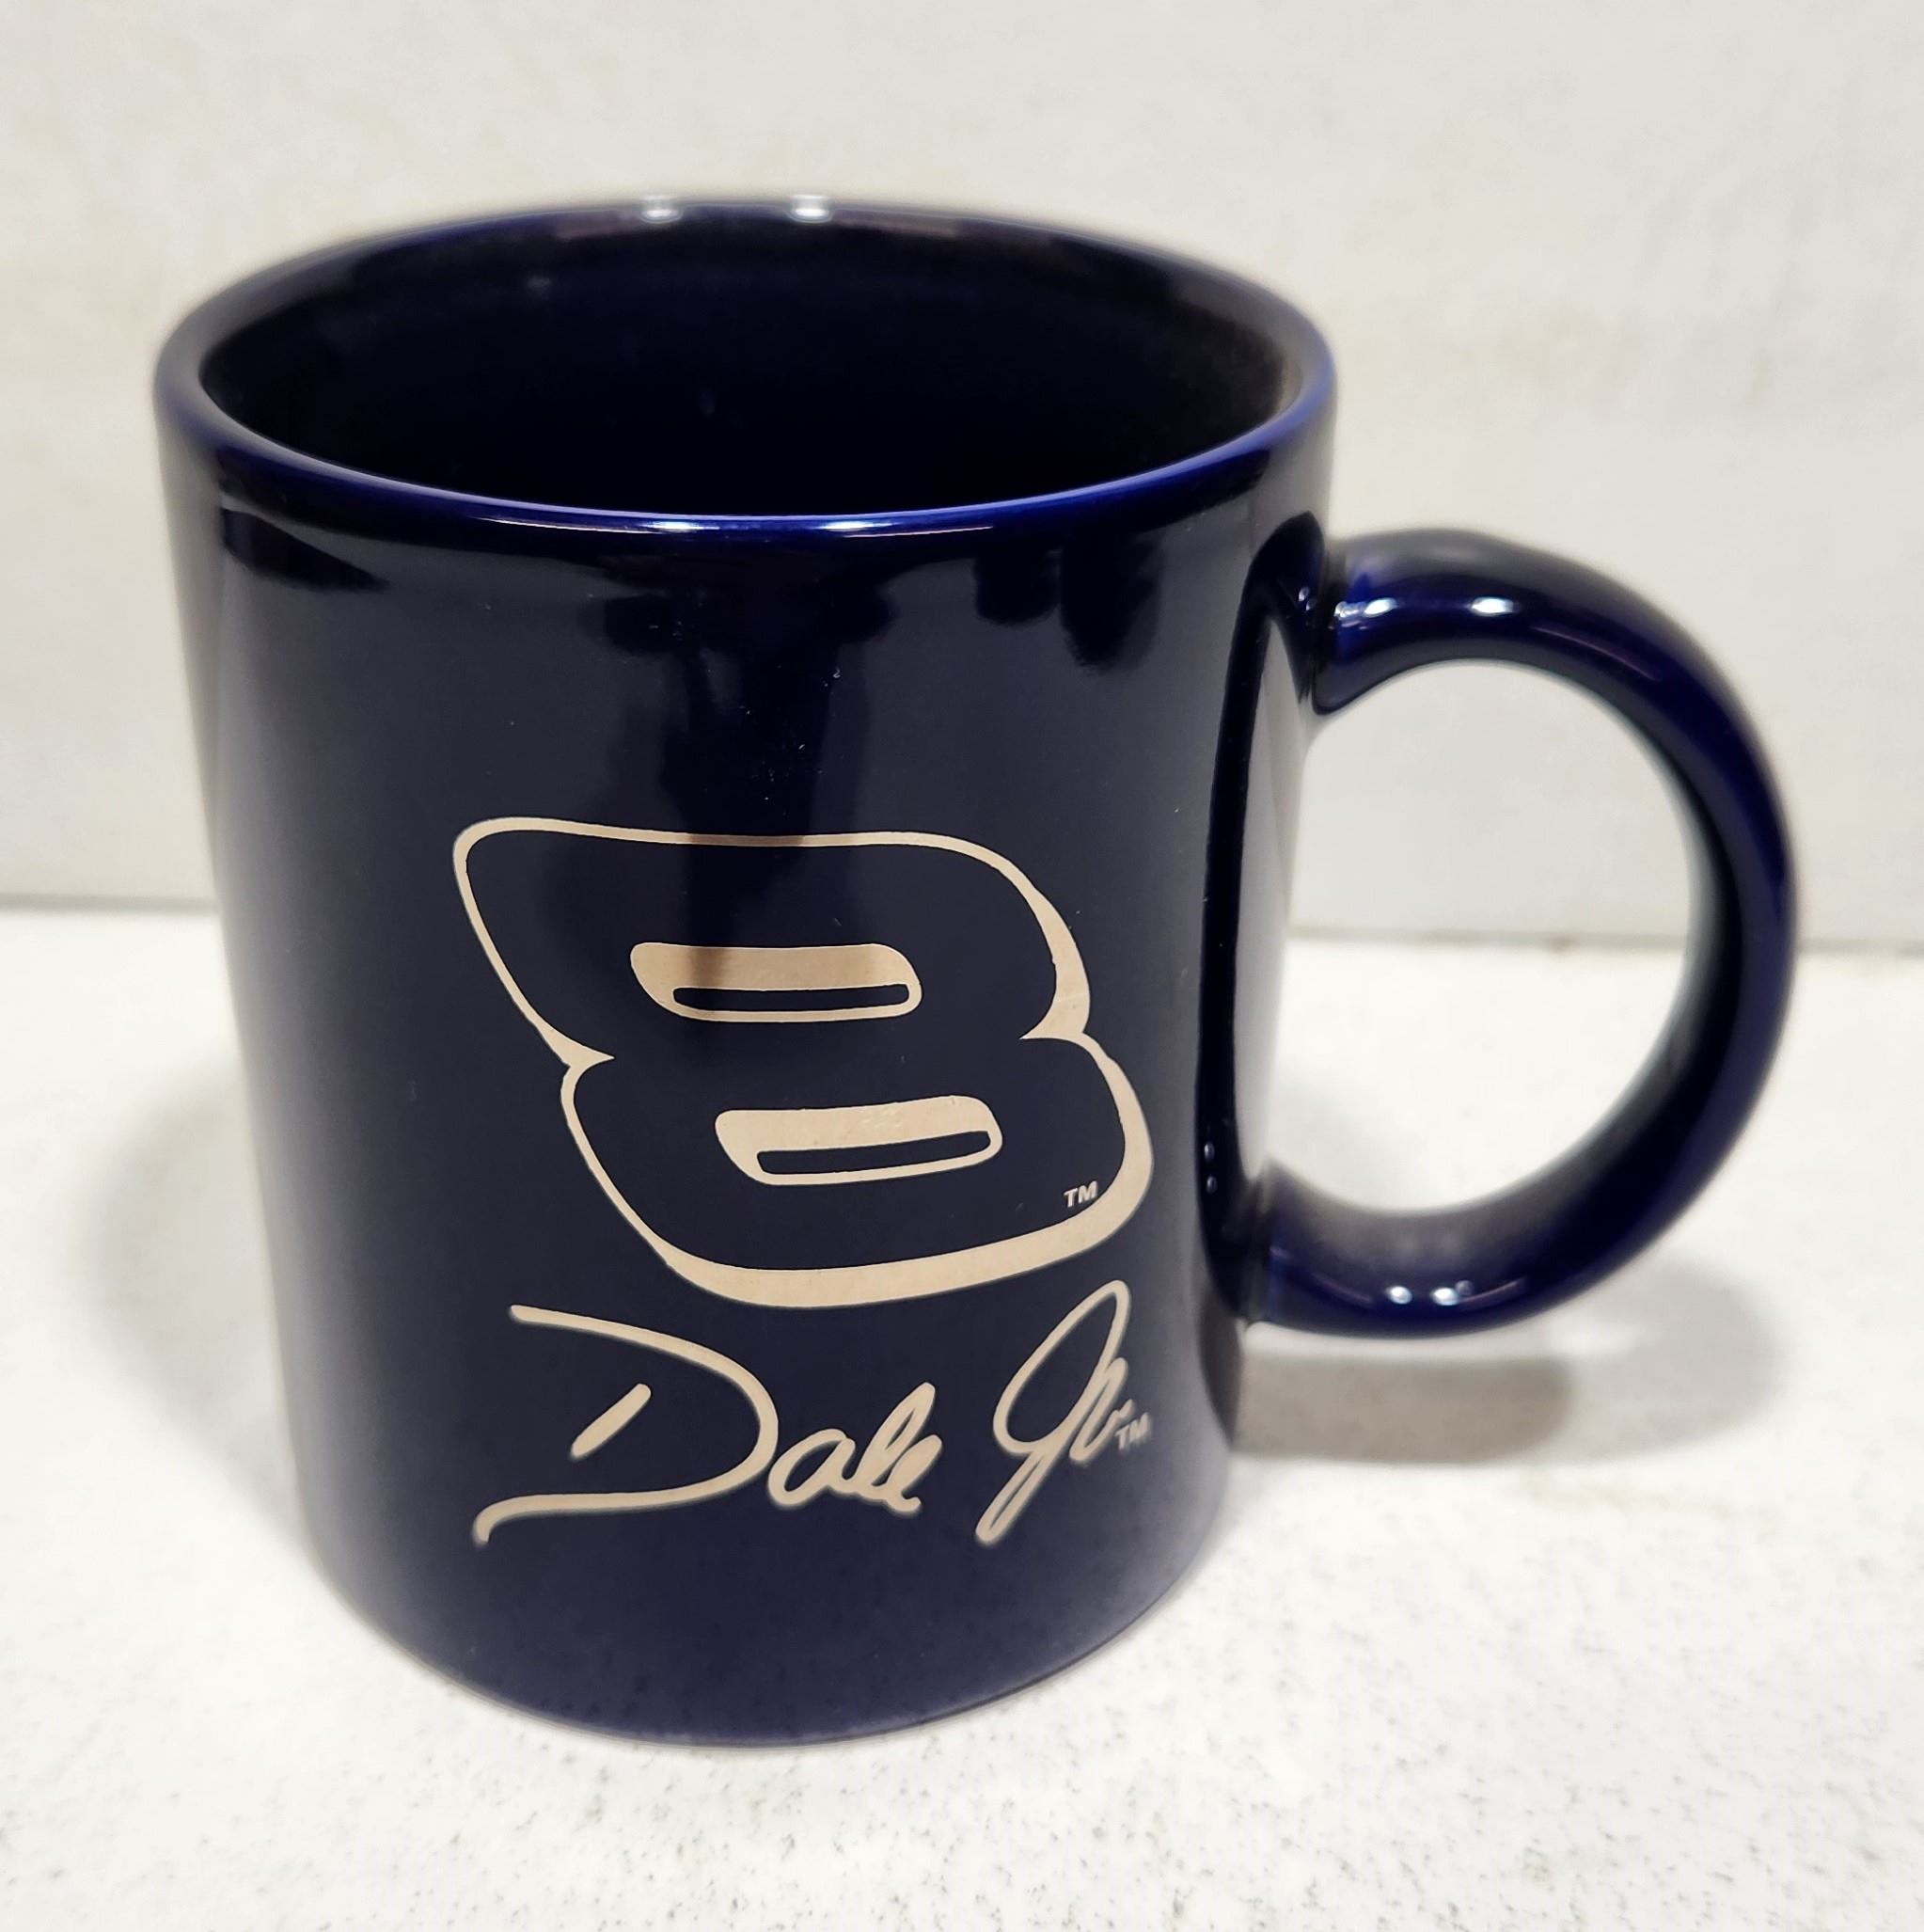 2003 Dale Earnhardt Jr #8 11 oz. collectors mug